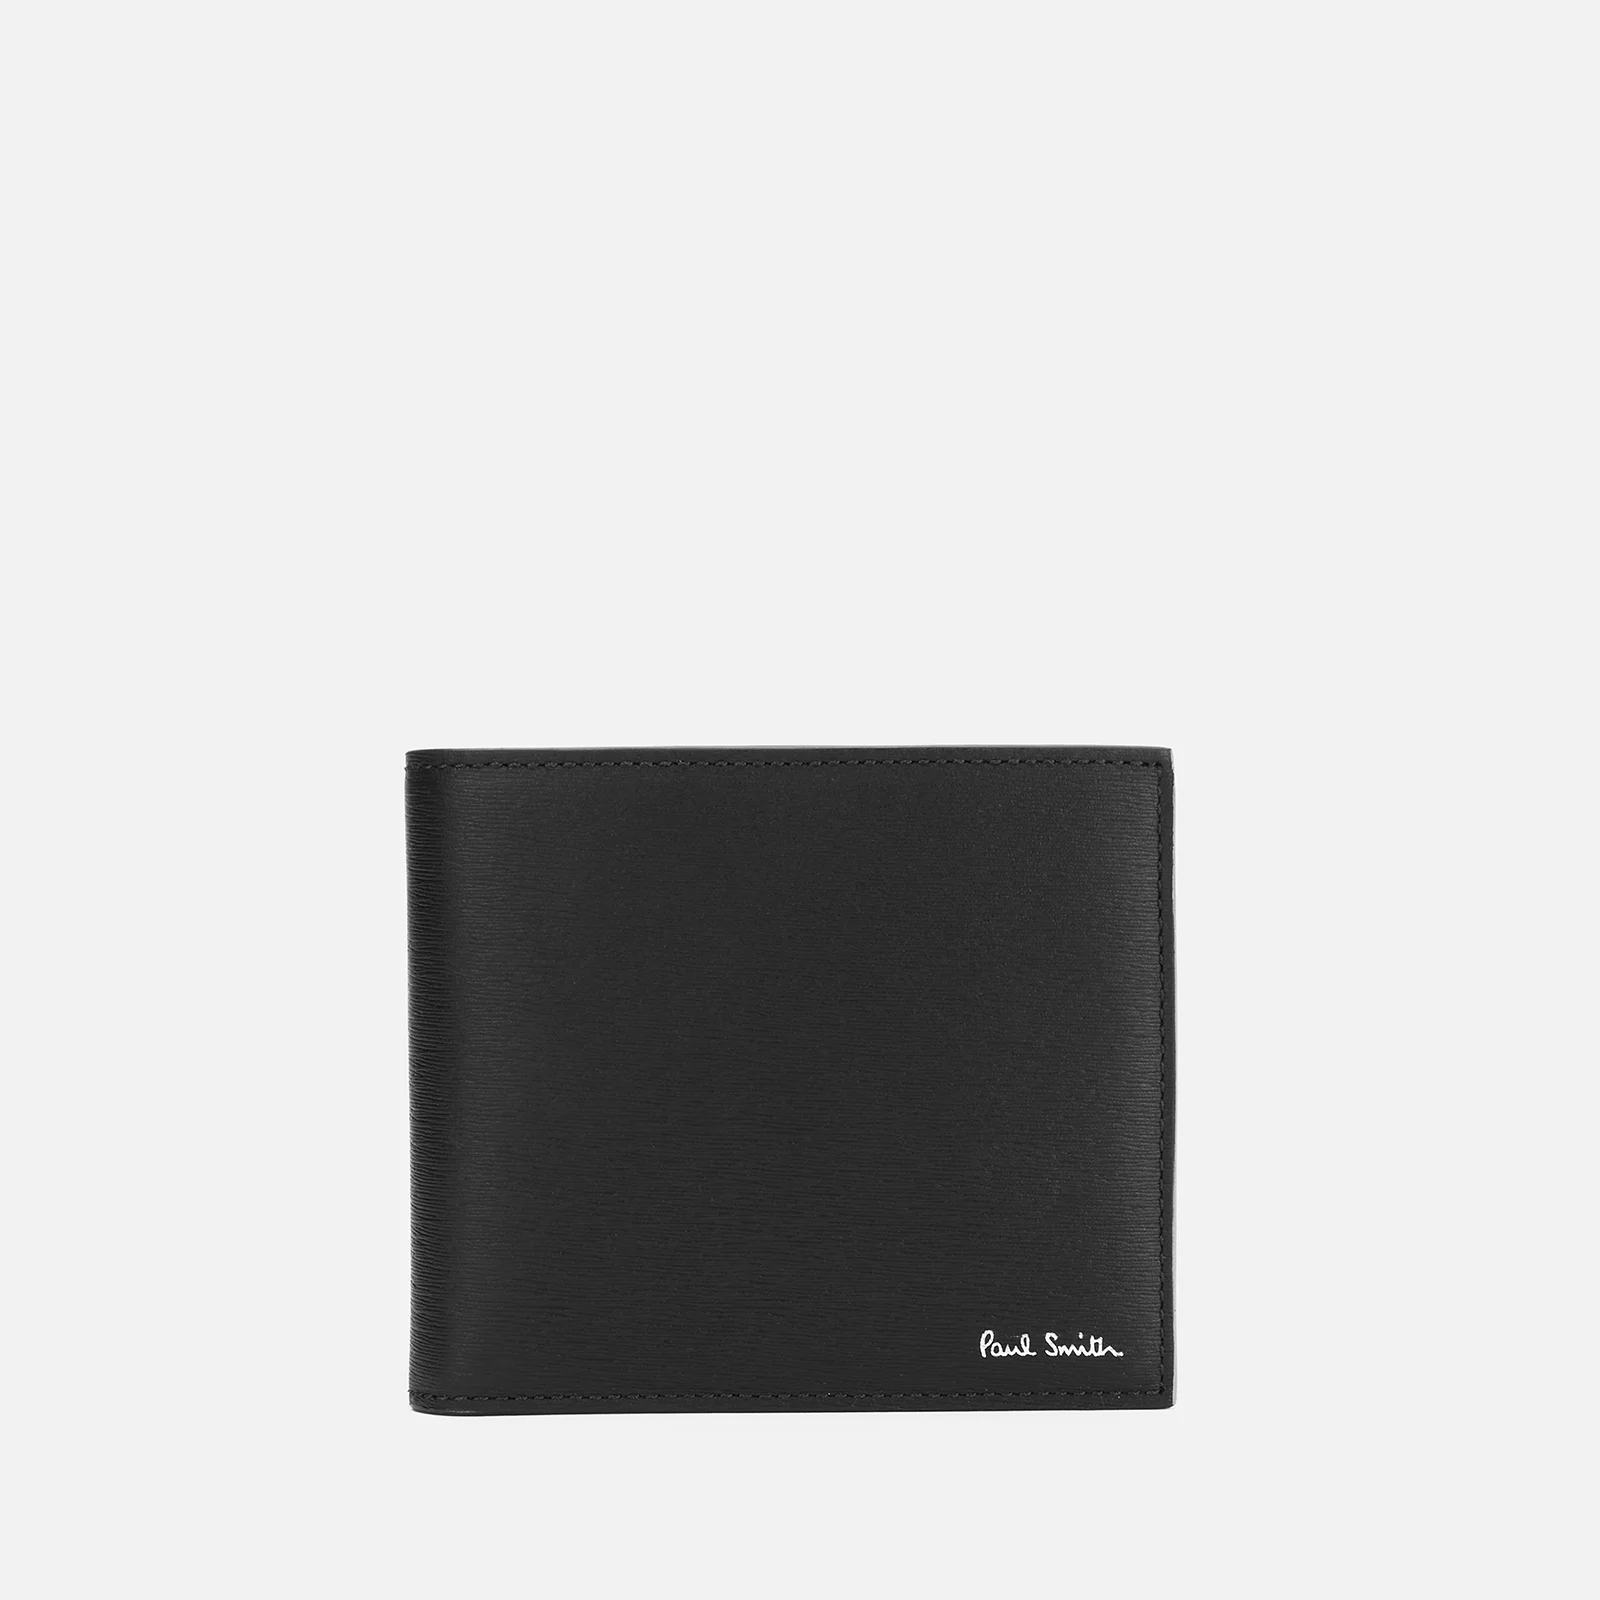 PS Paul Smith Men's Strawgrain Colour Block Wallet - Black Image 1